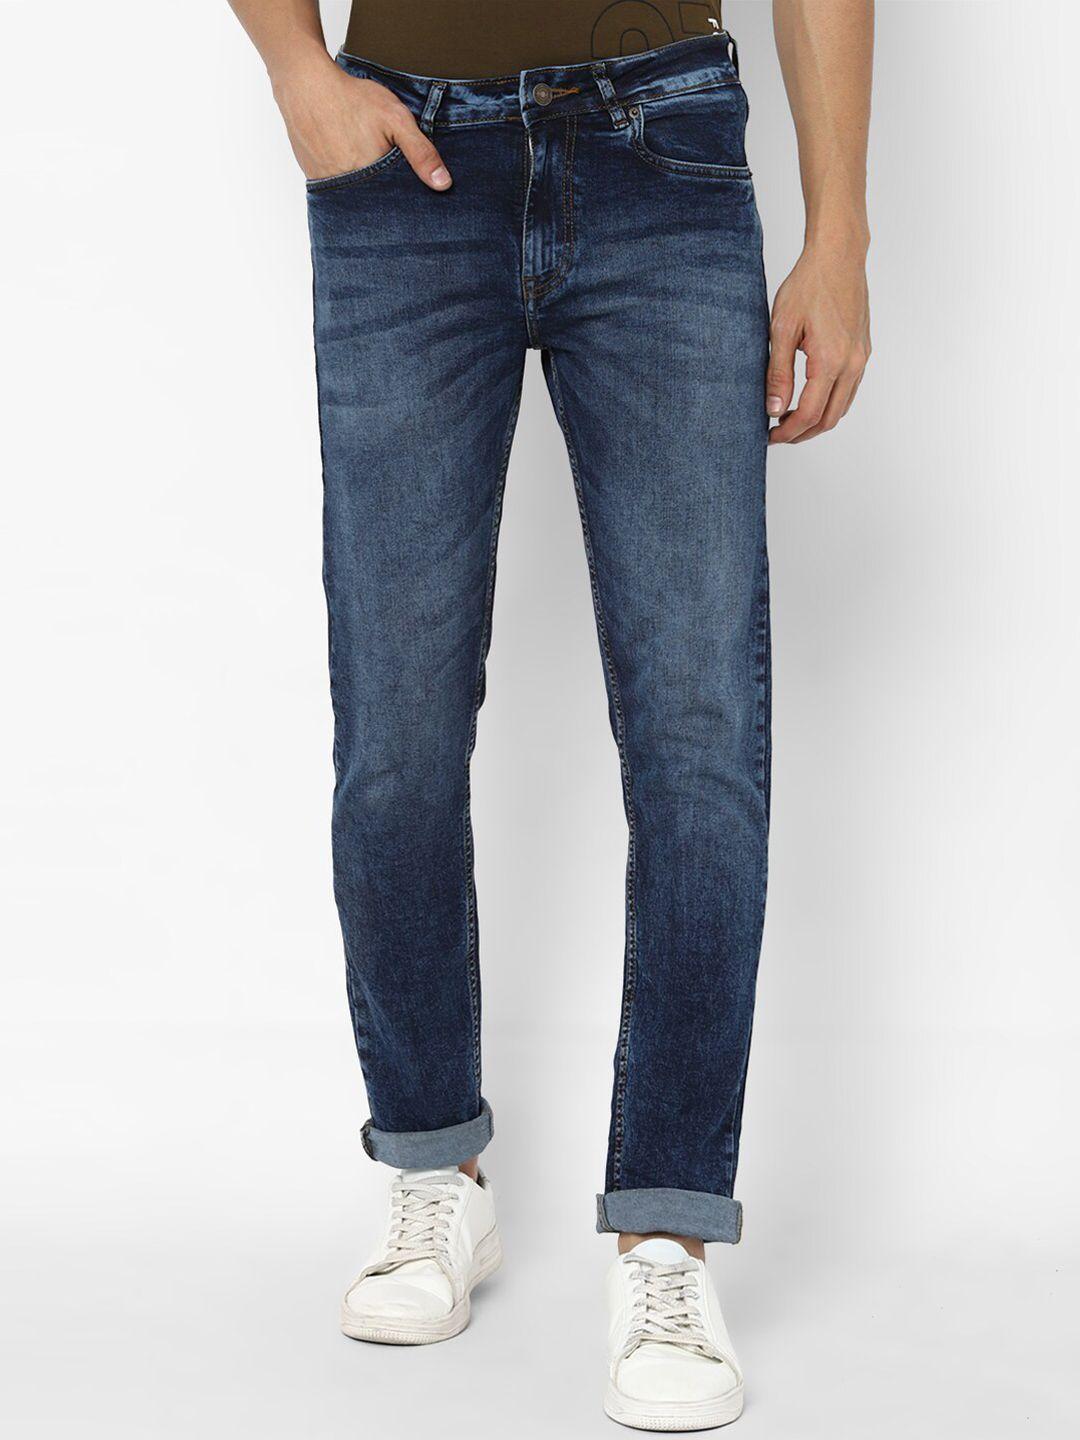 forever-21-men-navy-blue-regular-fit-heavy-fade-jeans